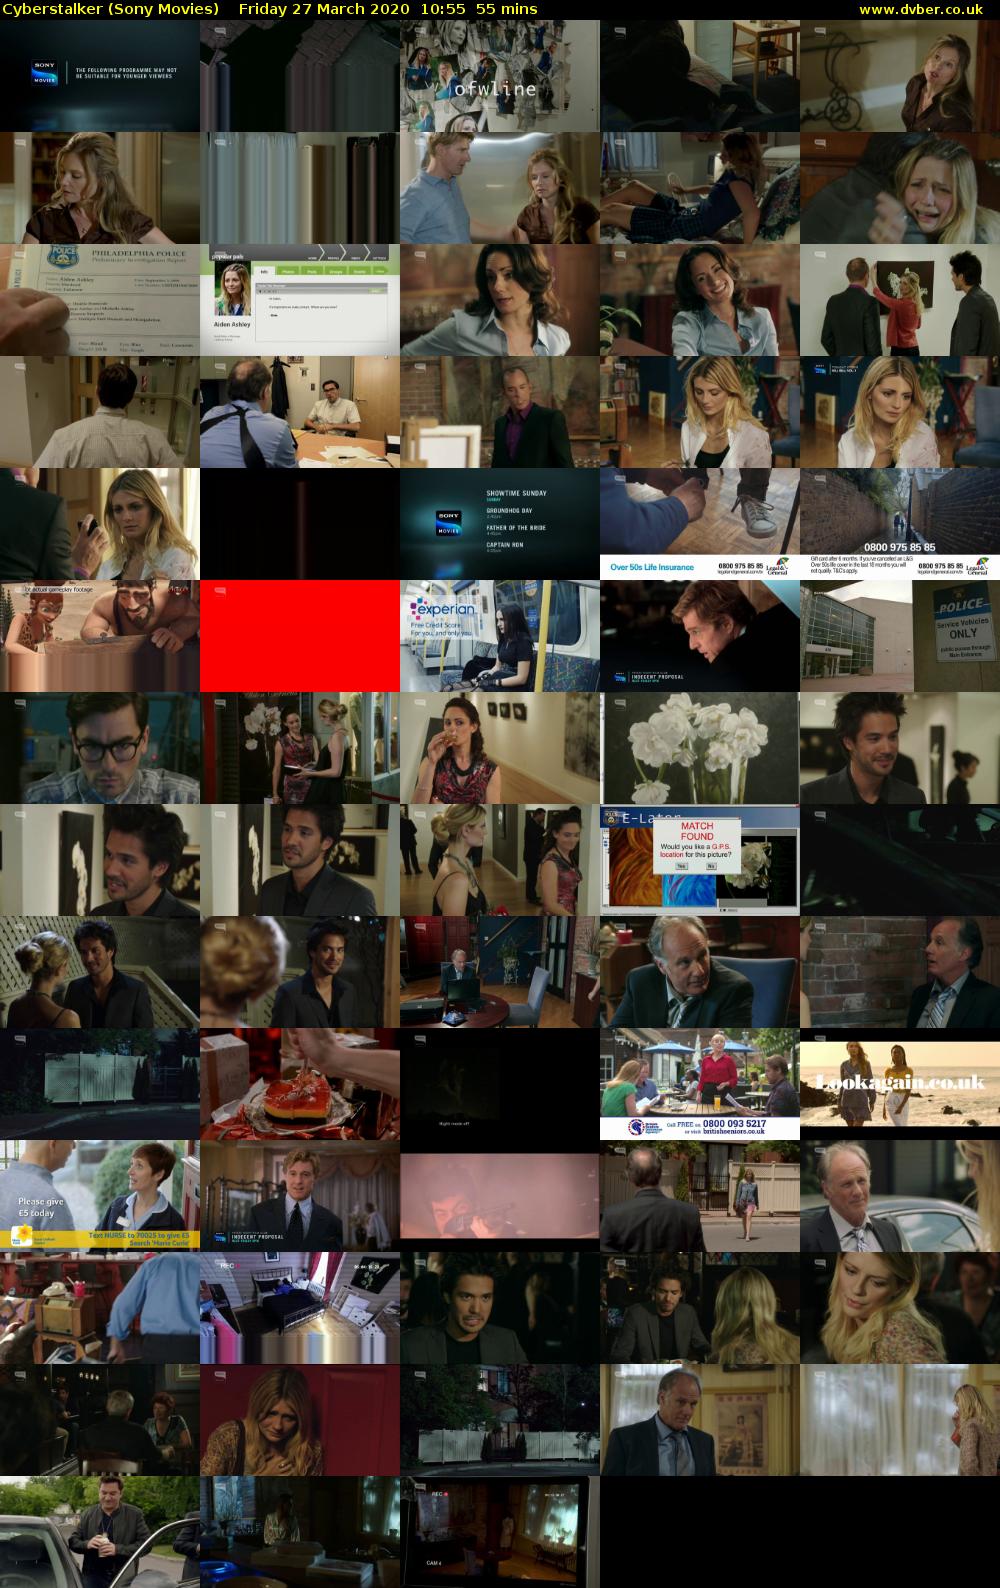 Cyberstalker (Sony Movies) Friday 27 March 2020 10:55 - 11:50